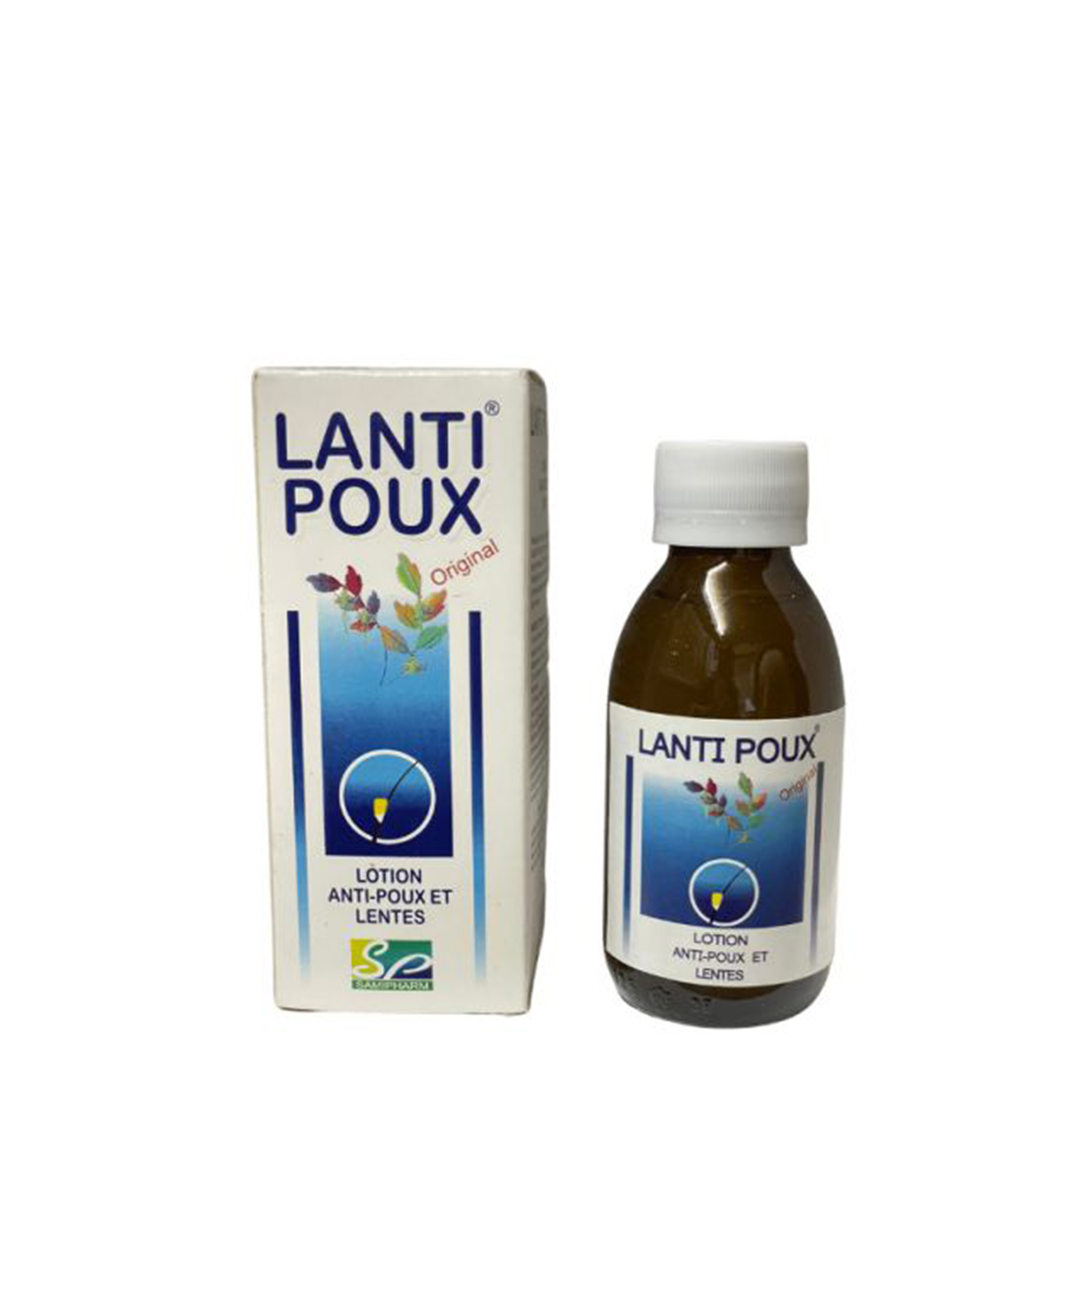 LANTI POUX Lotion Anti-Poux et Lentes 125ML - Citymall